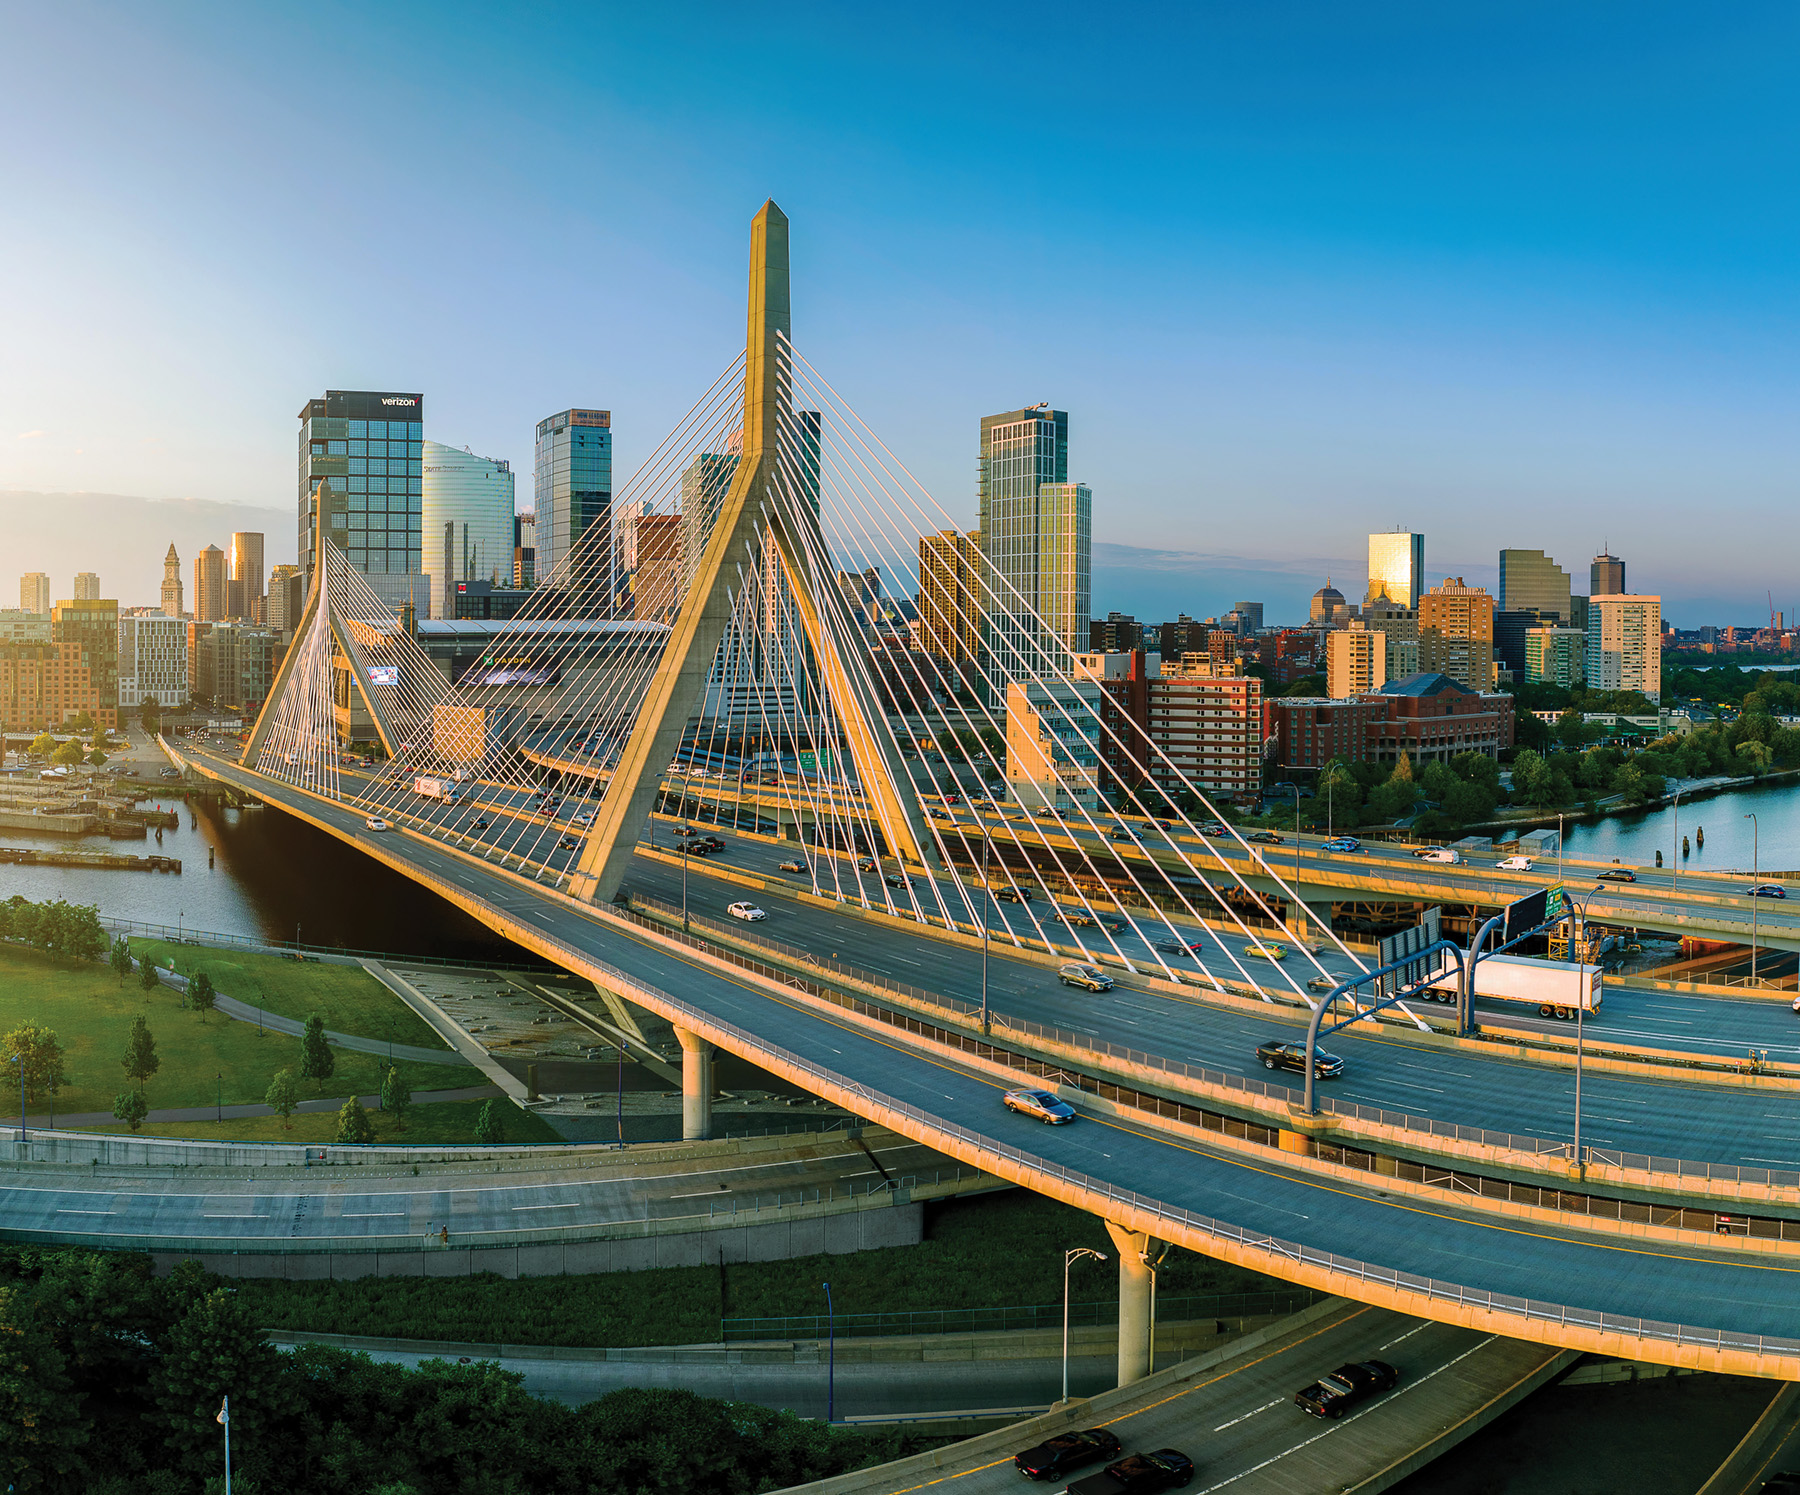 The Zakim bridge in Boston